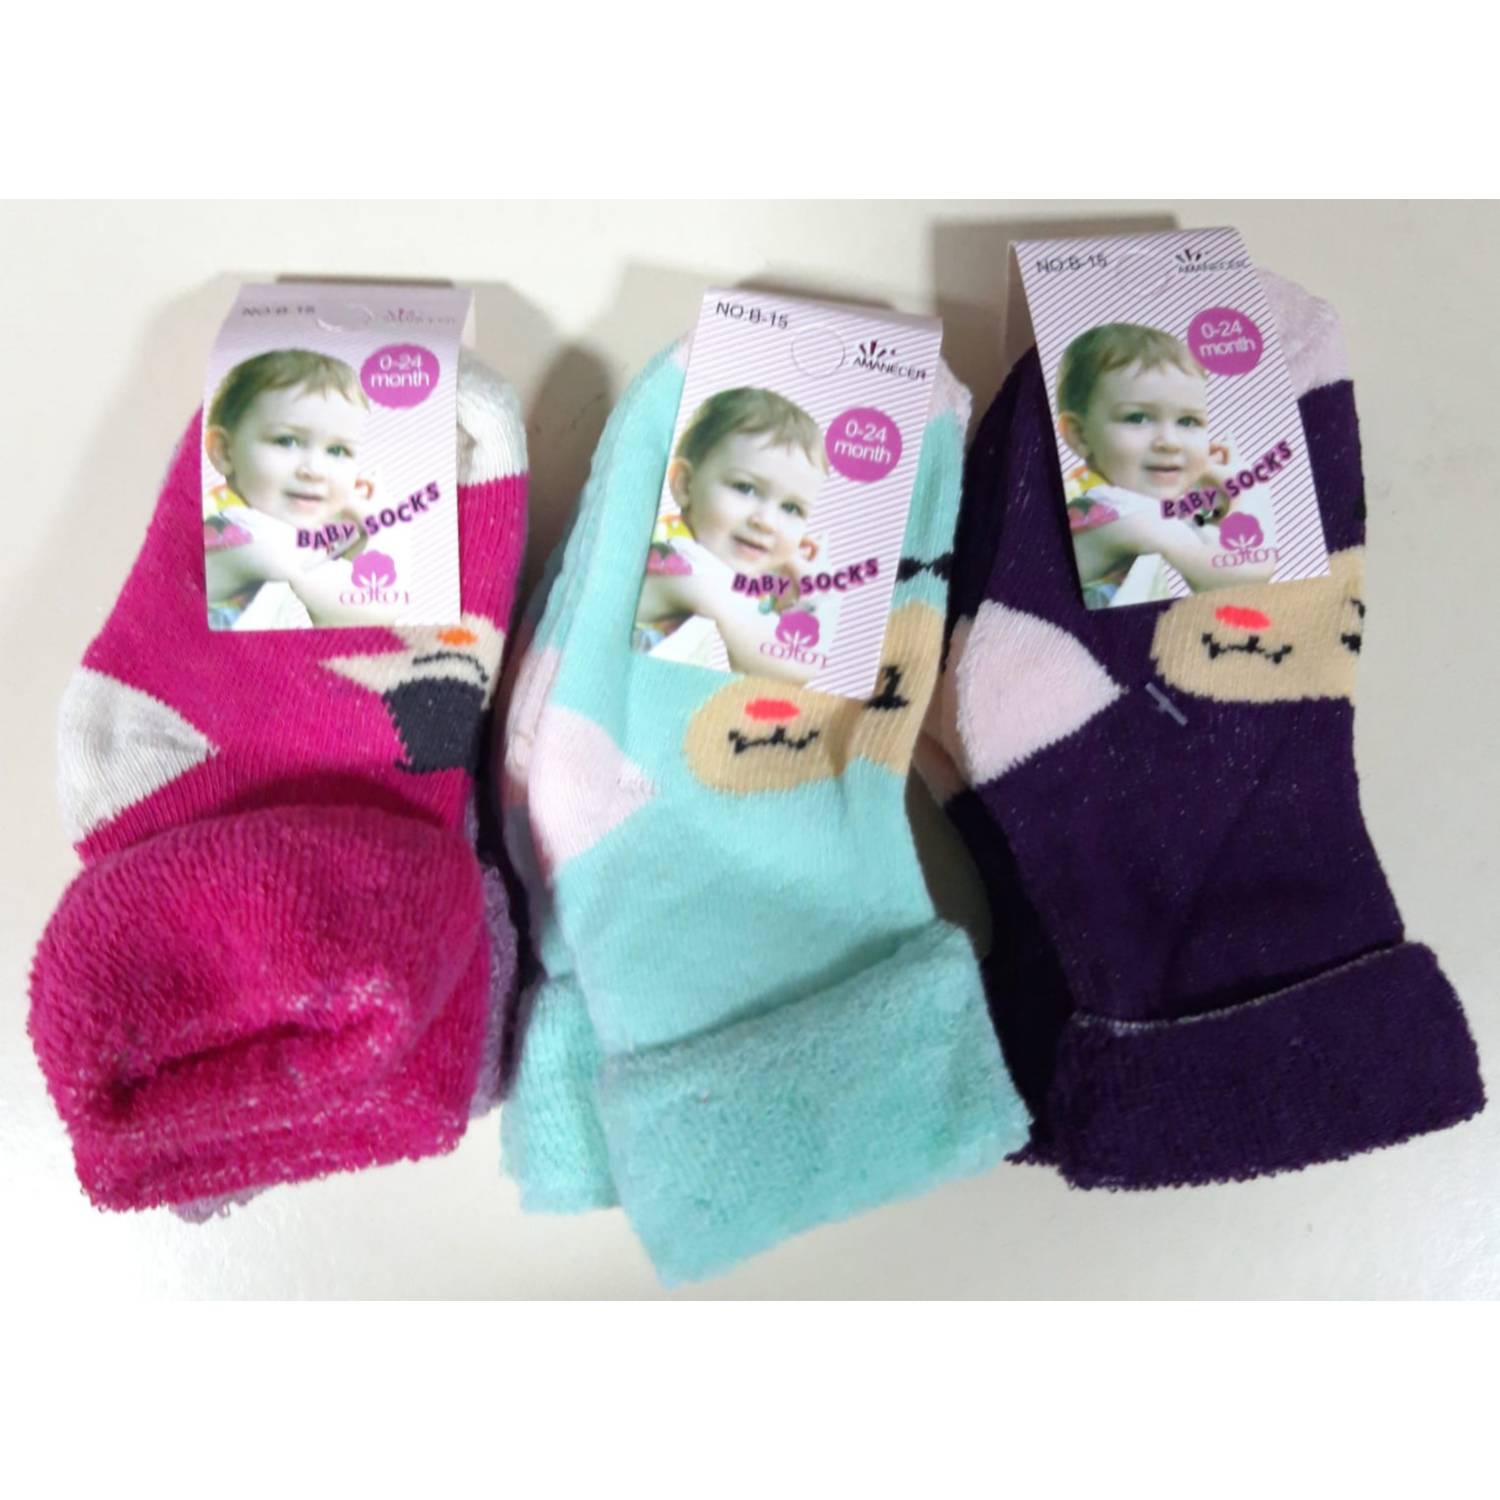 GENERICO Pack 6 pares de calcetines invierno para bebe 0 mes a 24 meses. falabella.com